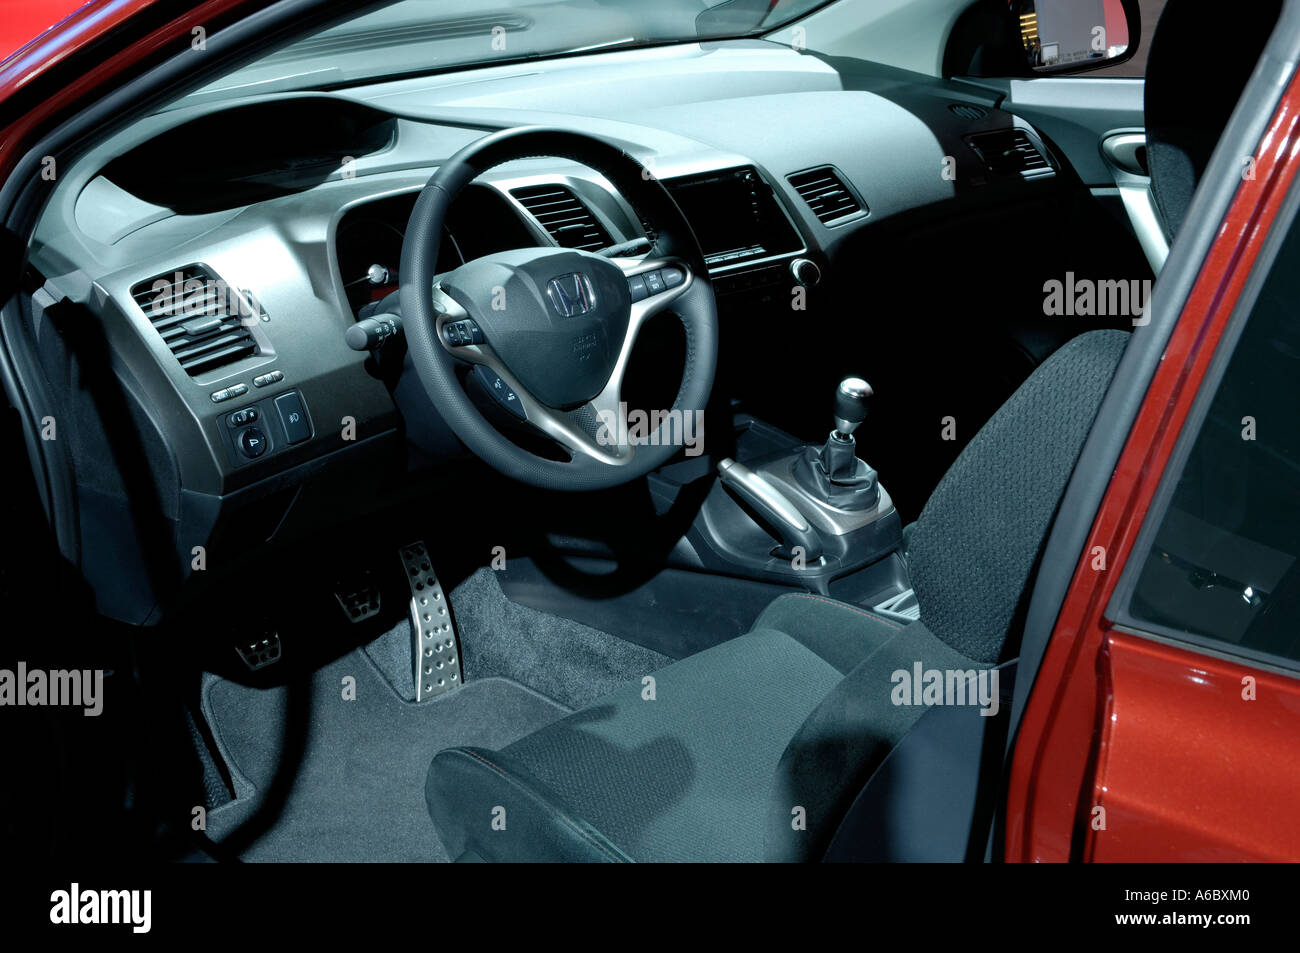 Interior Of A 2006 Honda Insight Hybrid Car At The North